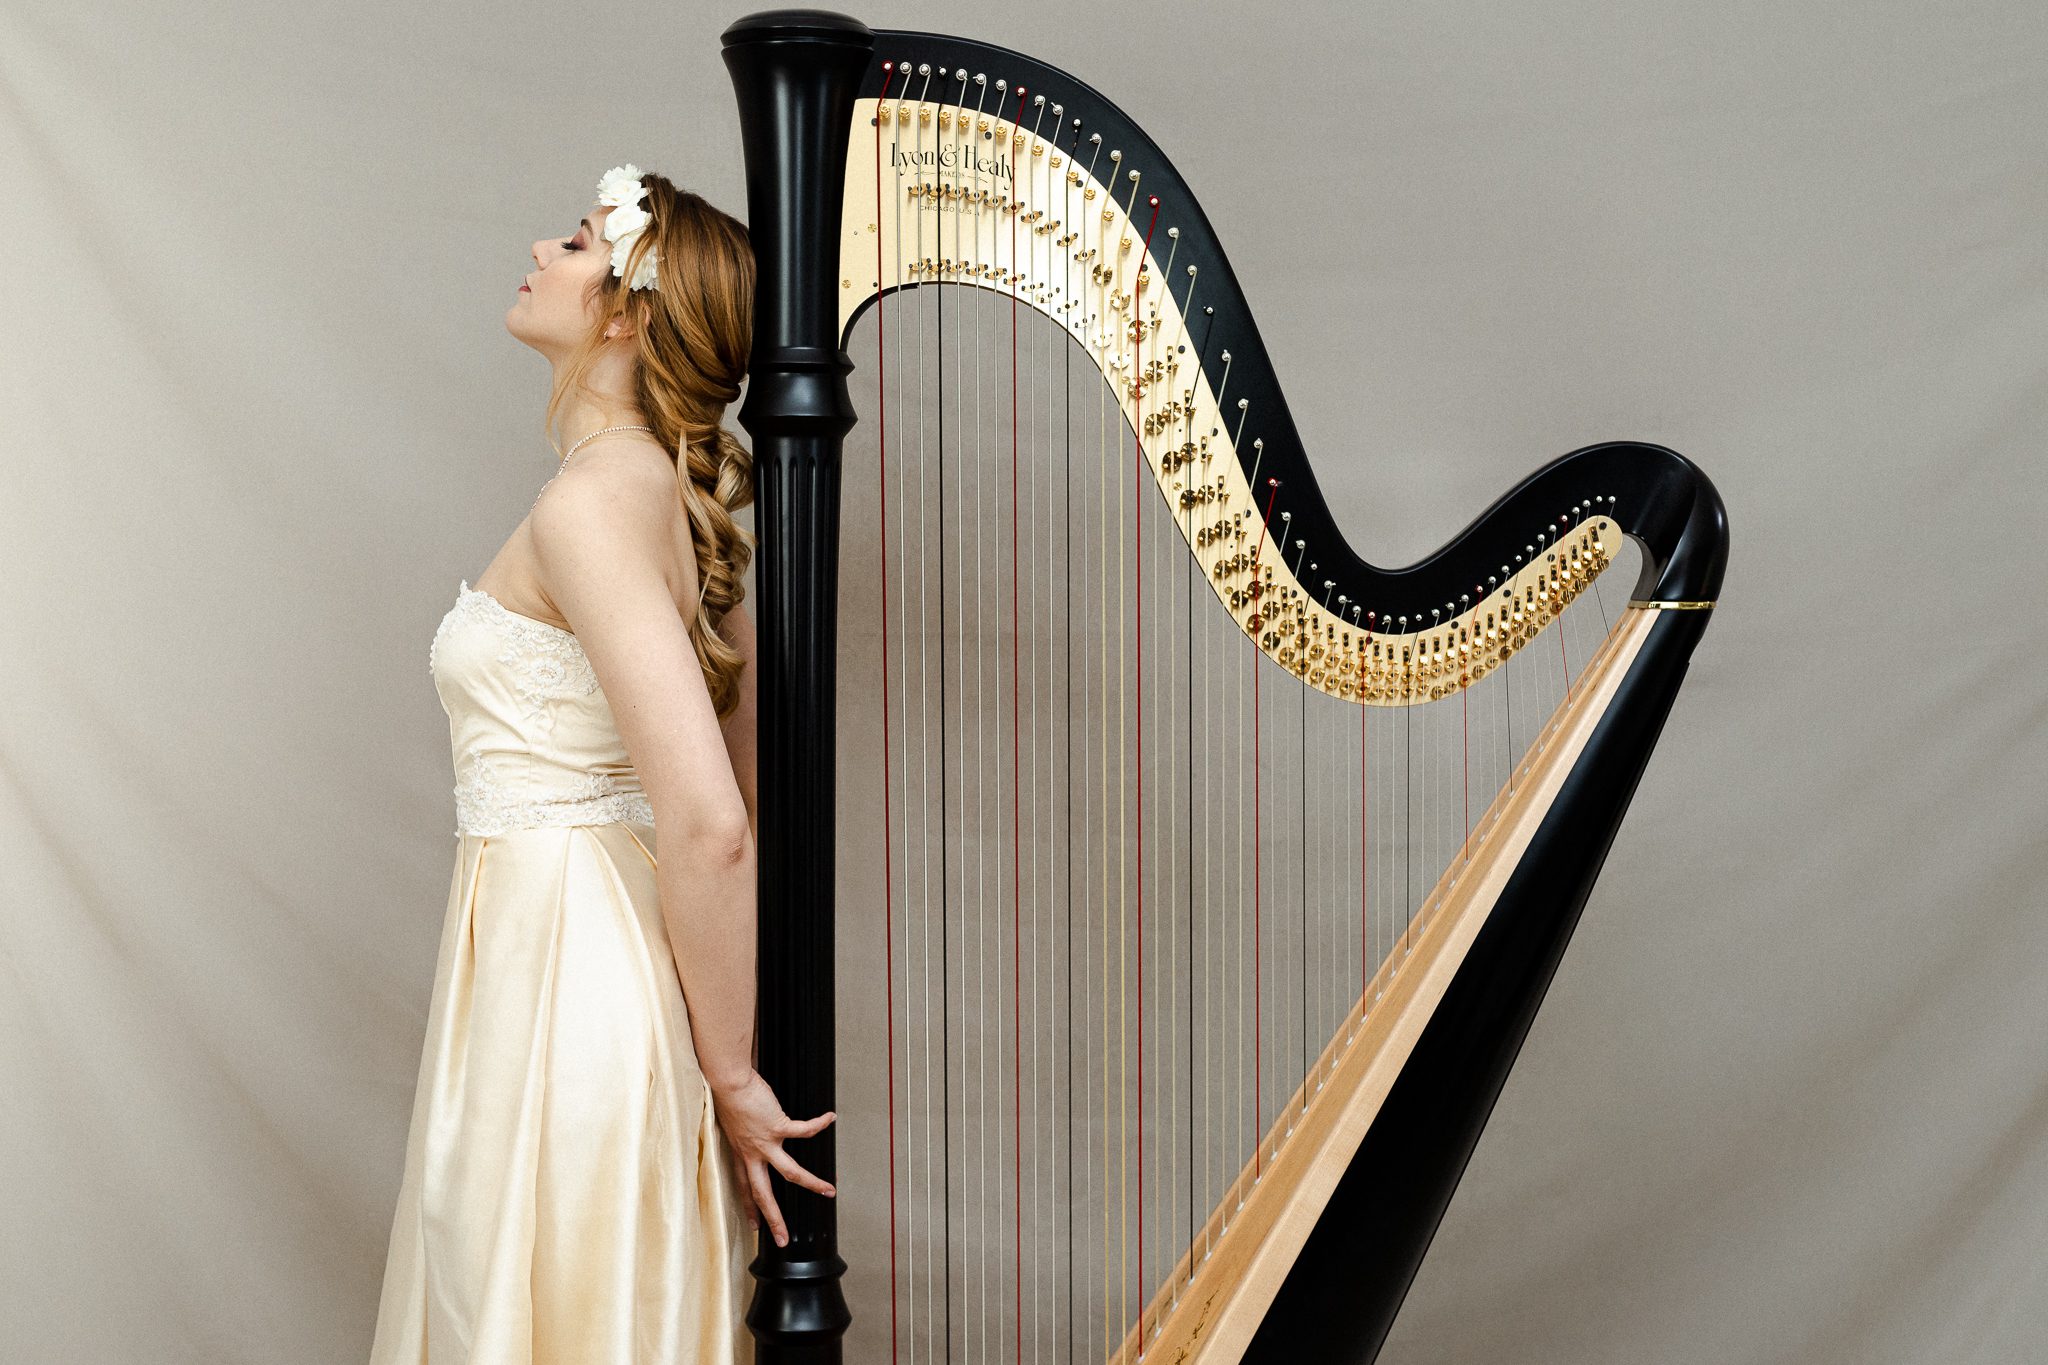 Photo Book Valeria De Vita - Chiara Evangelista Harp, Arpa06